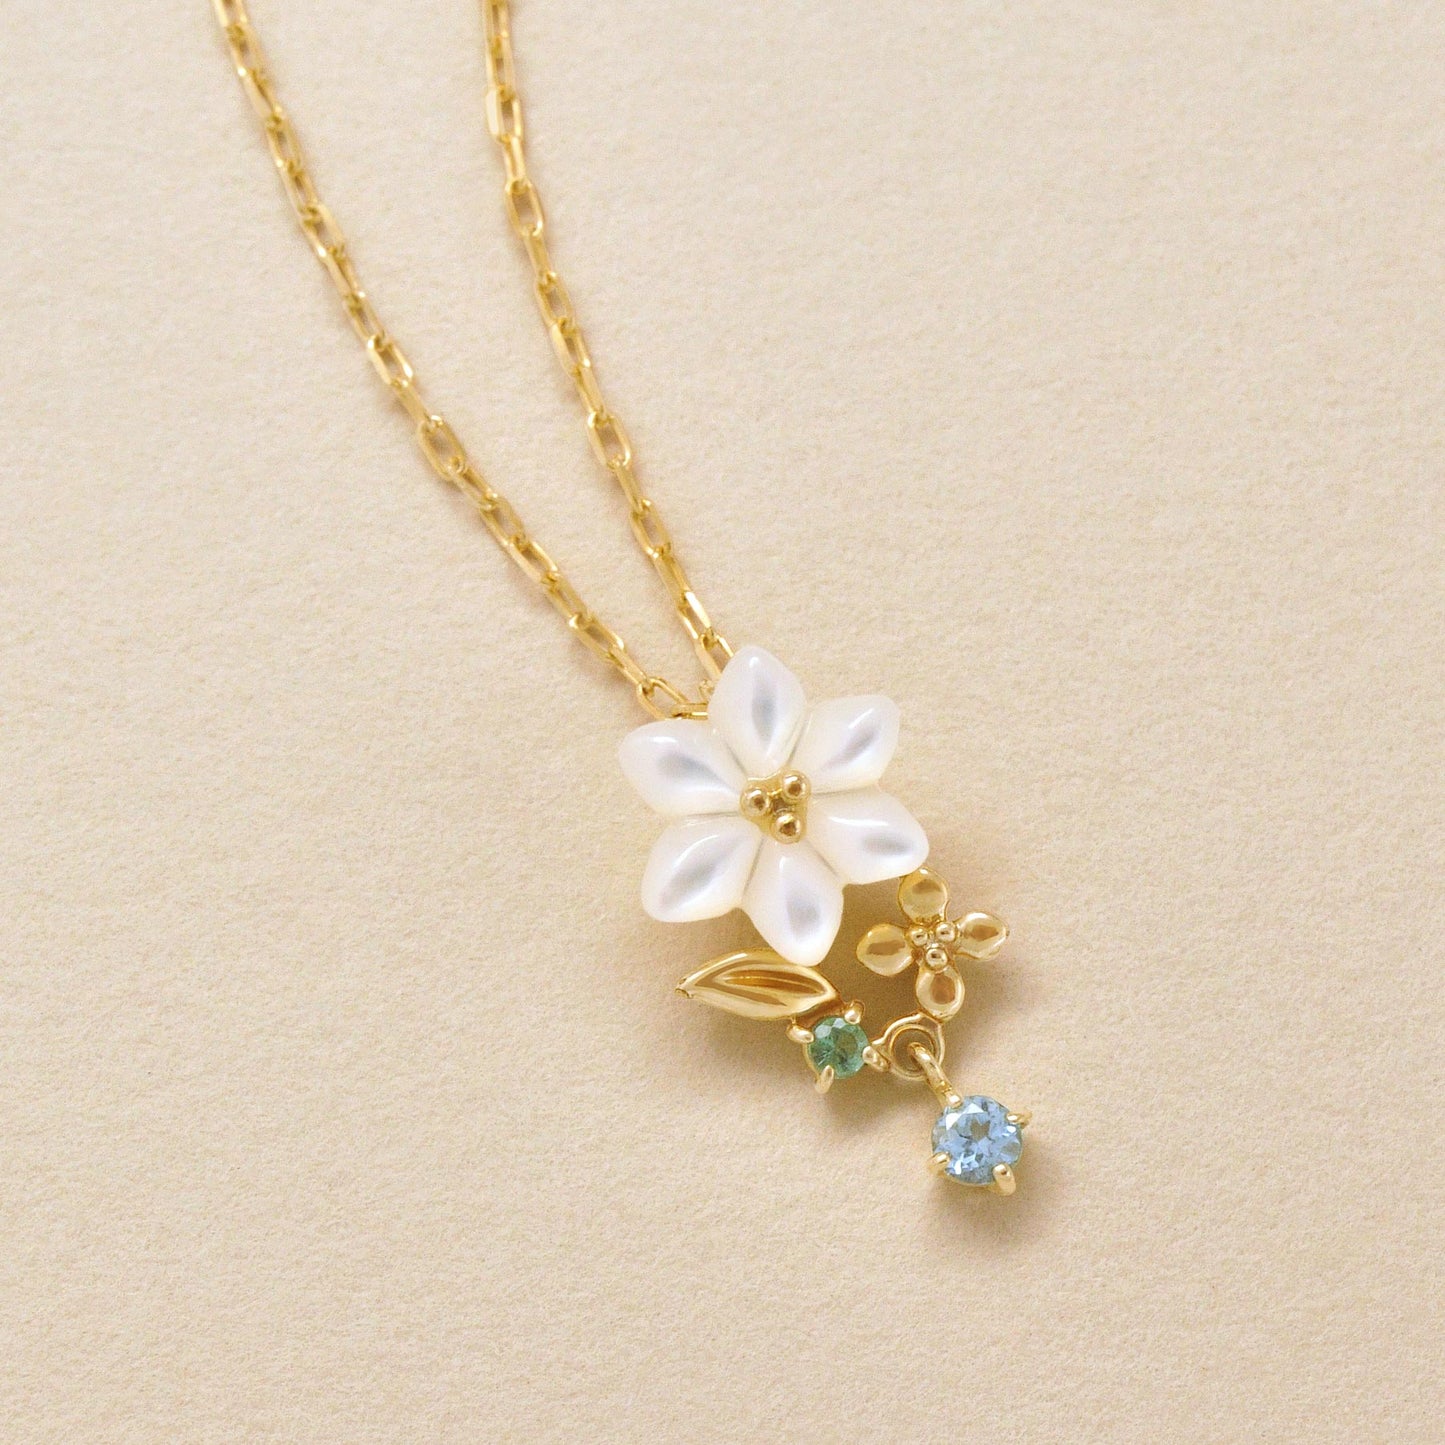 [Birth Flower Jewelry] November - Bouvardia Necklace (10K Yellow Gold) - Product Image